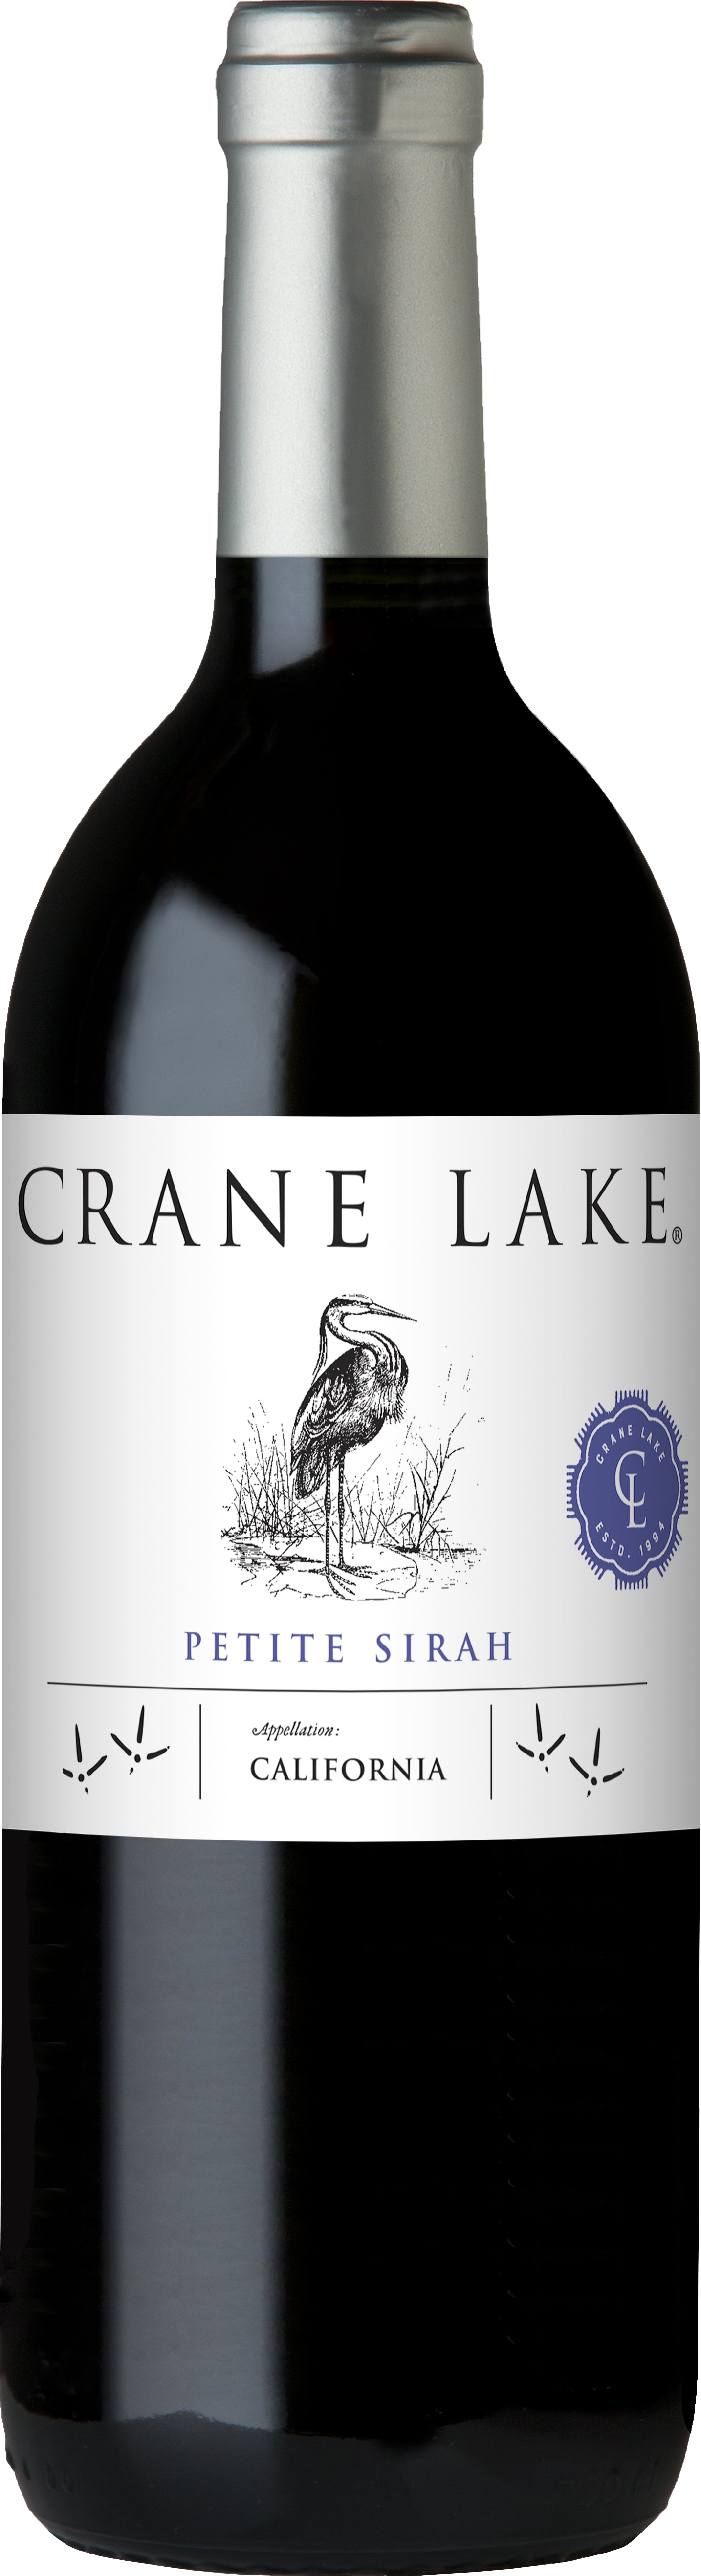 Crane Lake Petite Sirah 2015